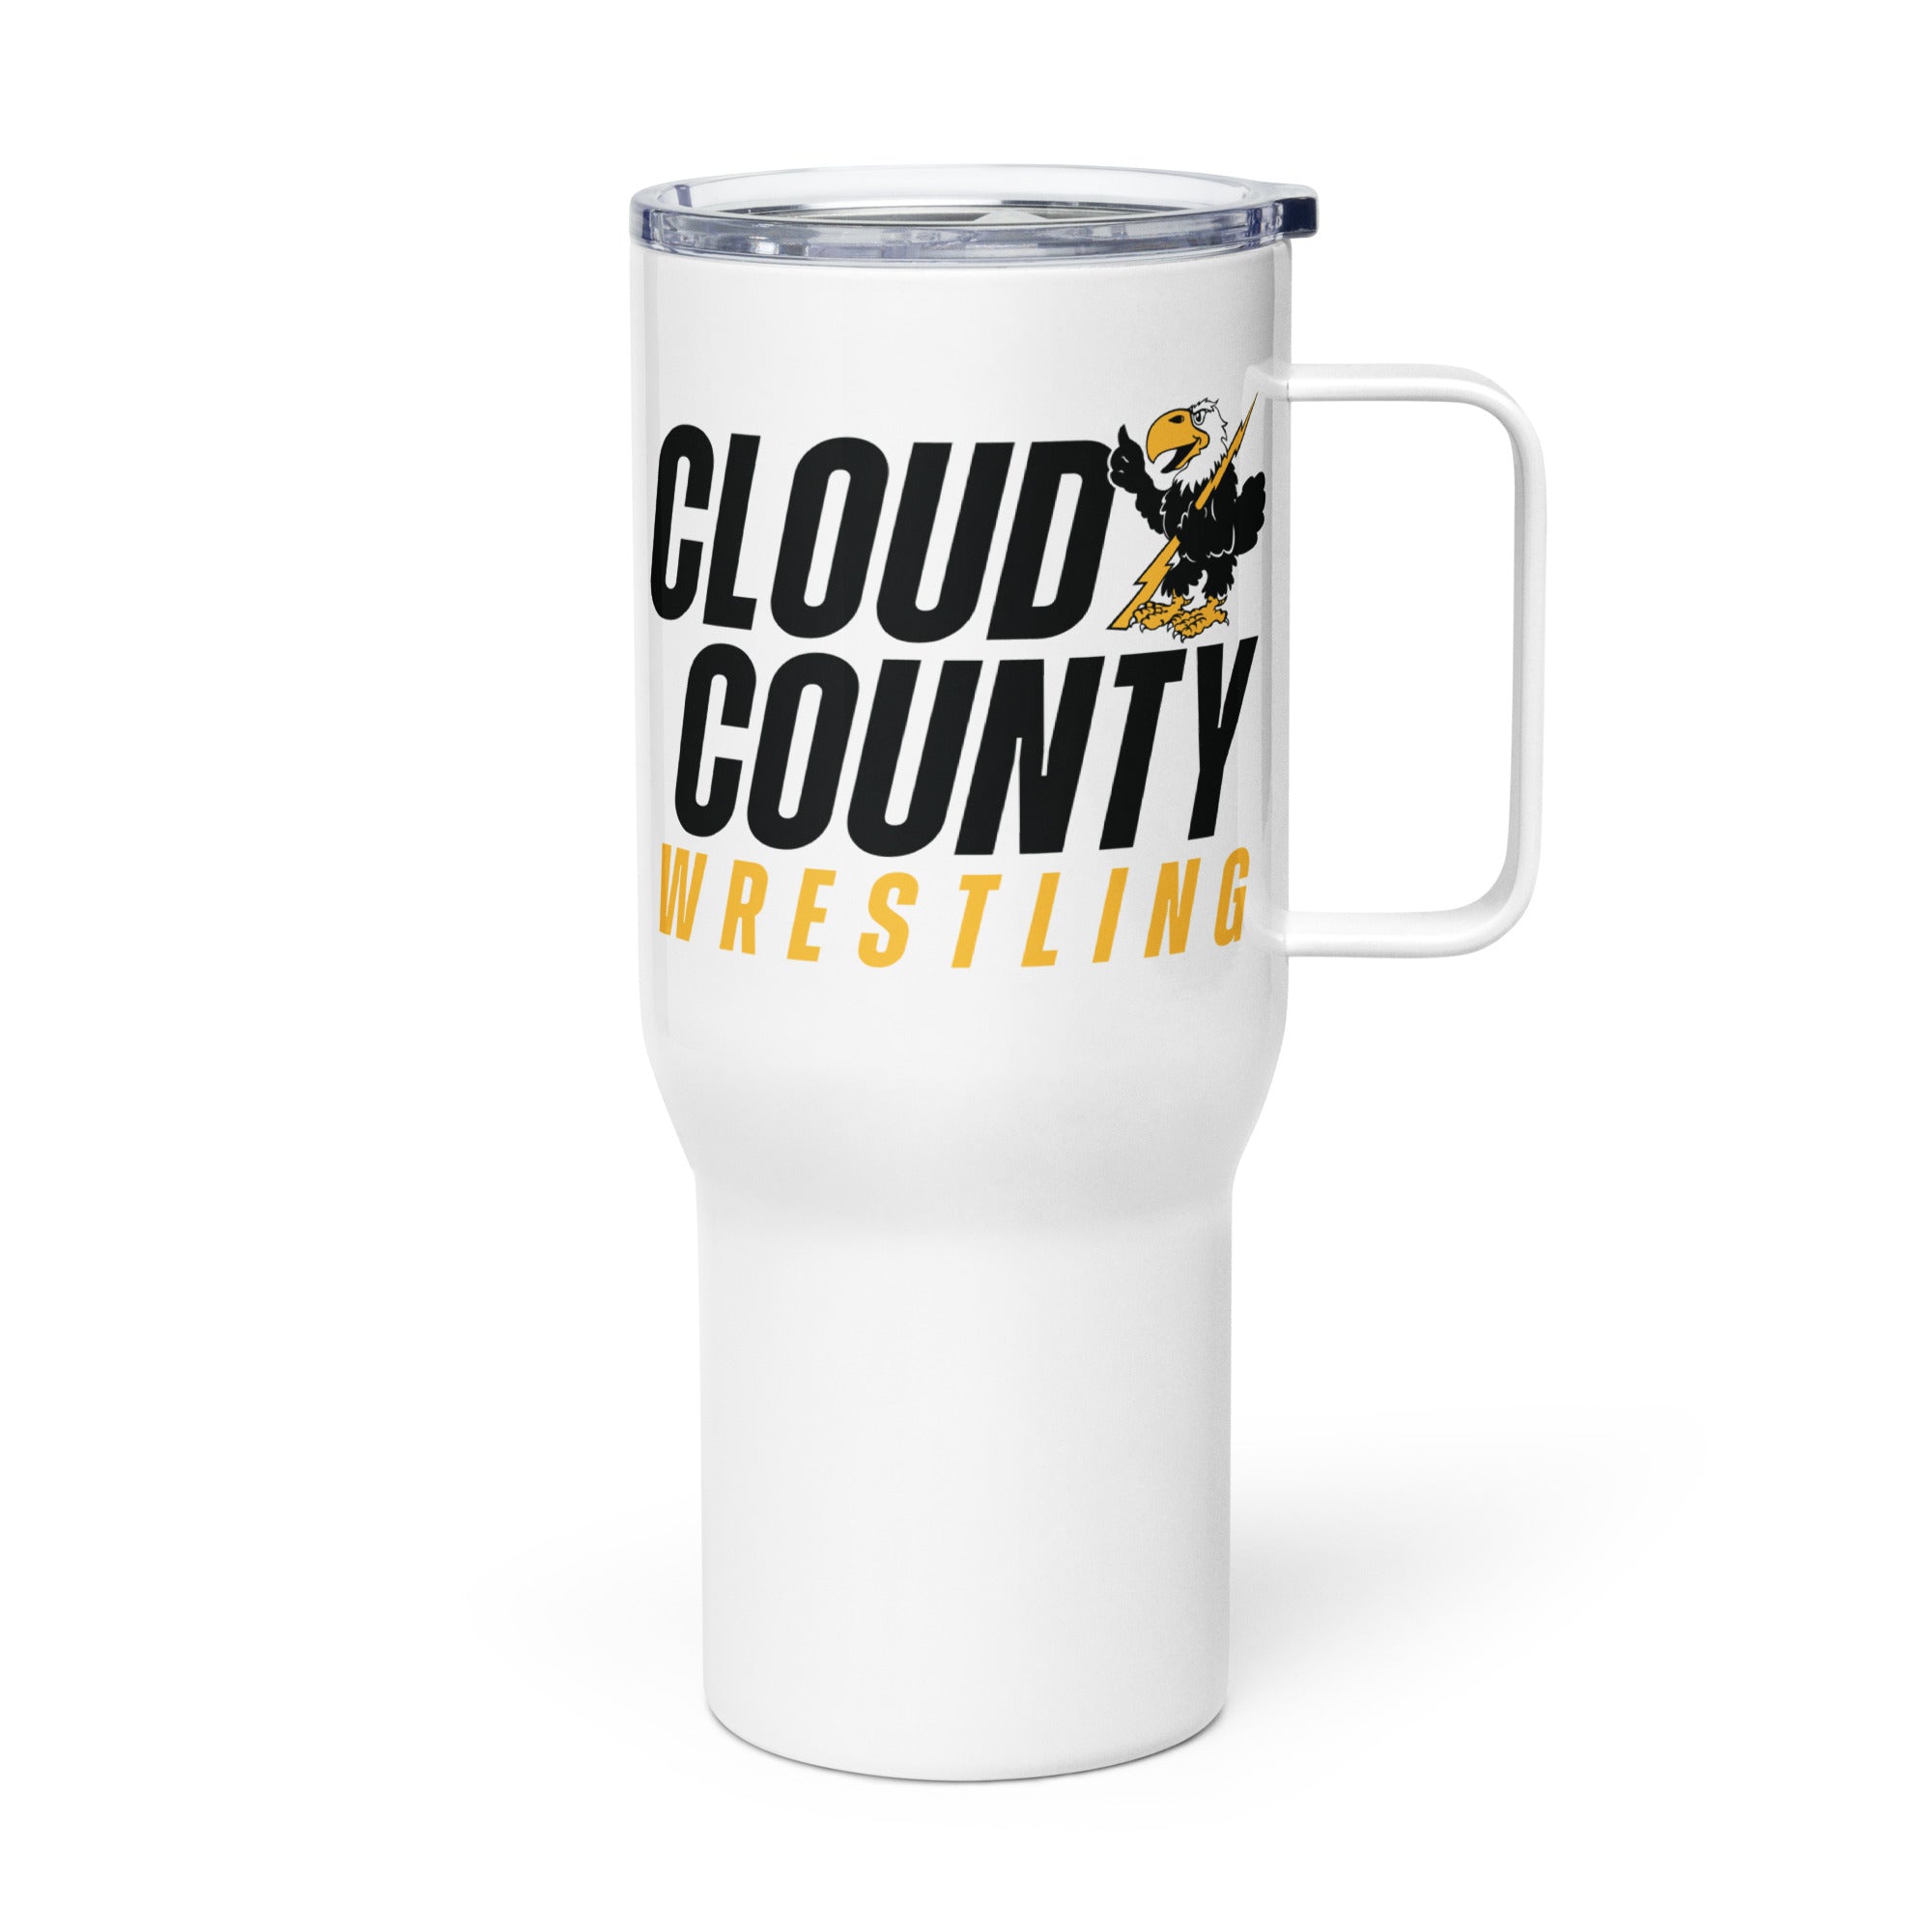 Cloud County CC Wrestling Travel mug with a handle